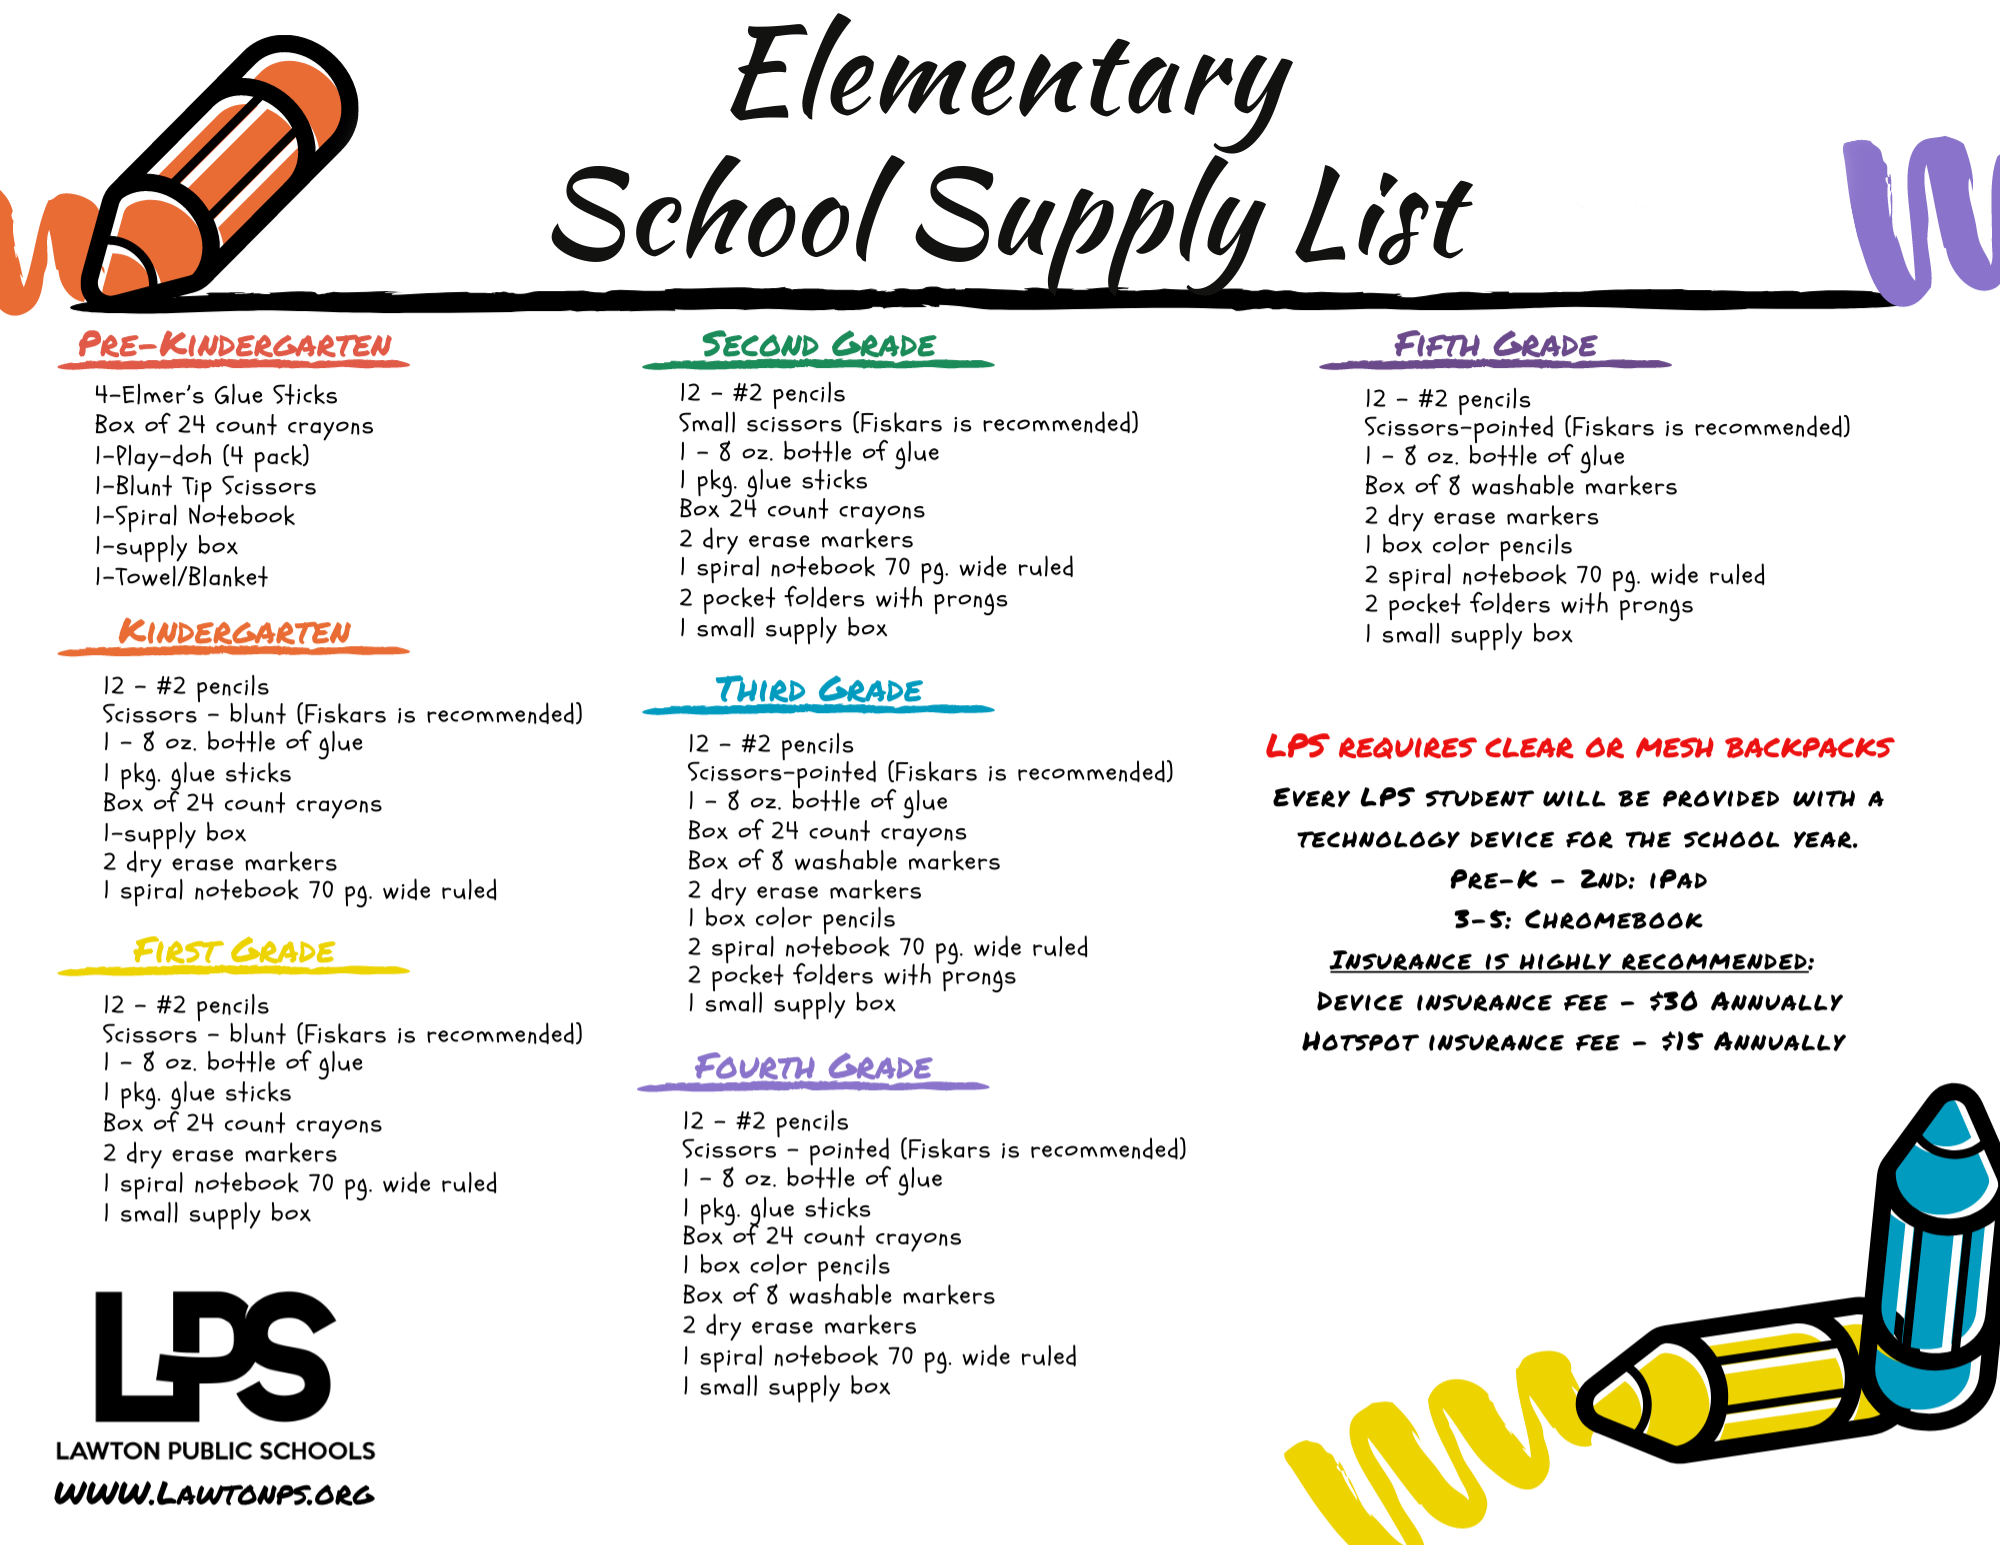 Elementary School Supply List